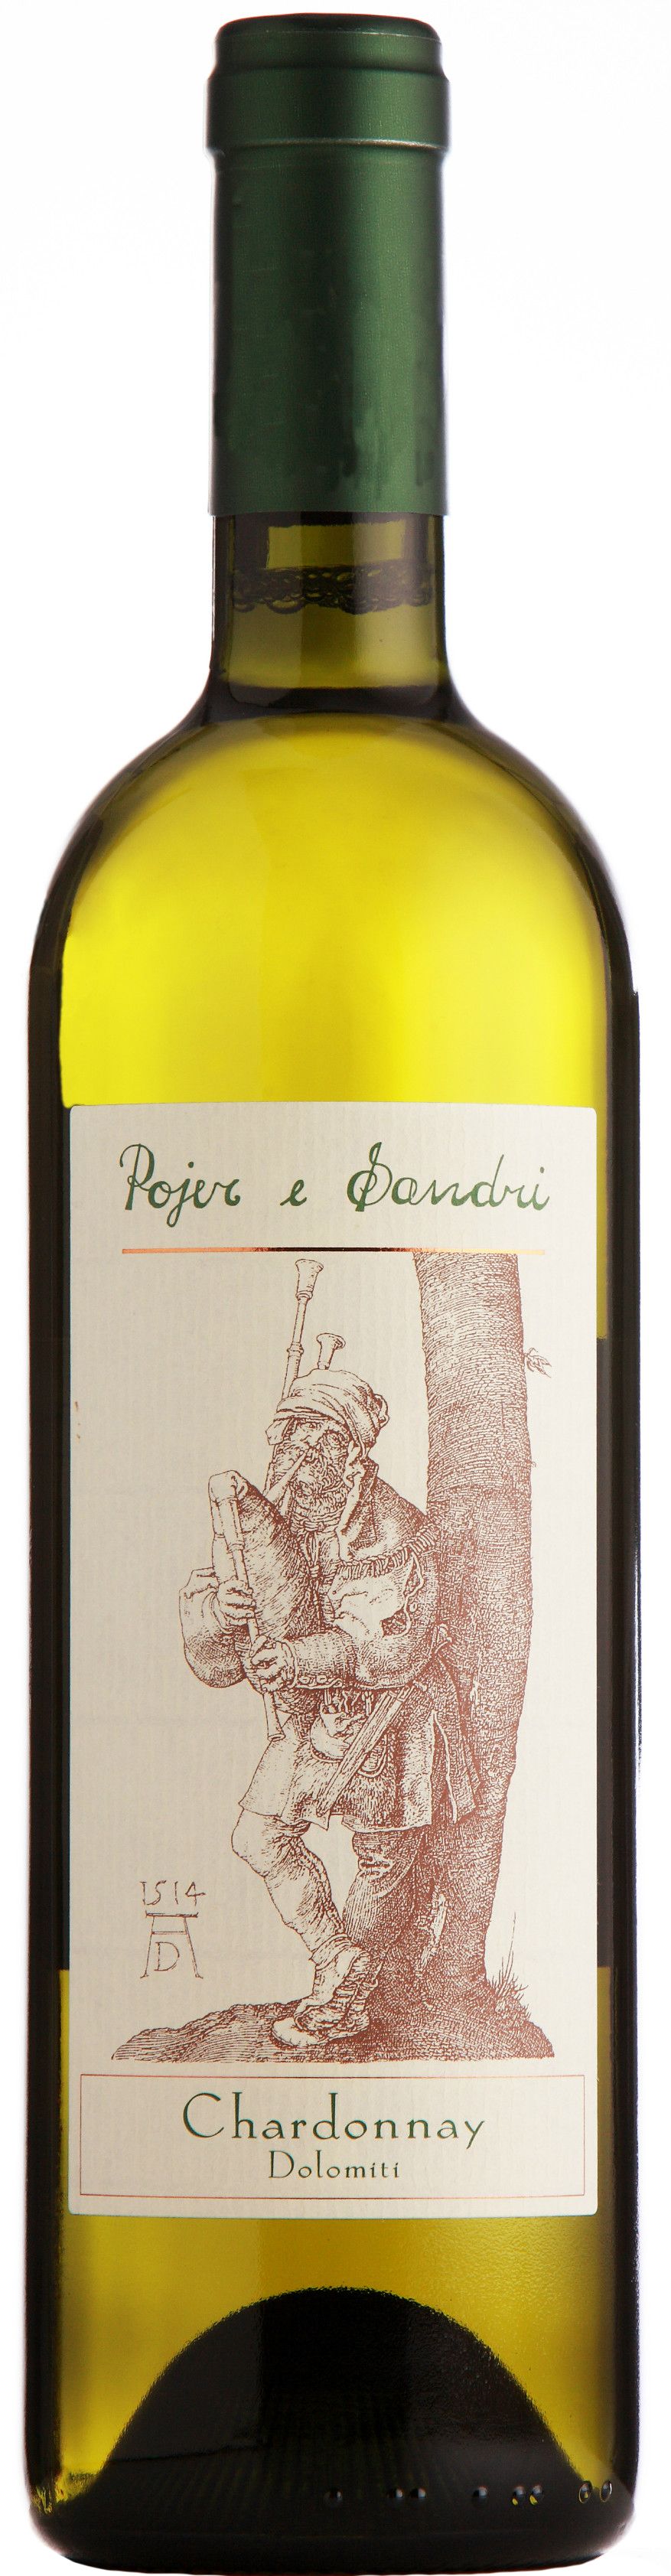 Pojer & Sandri, Chardonnay, 2006